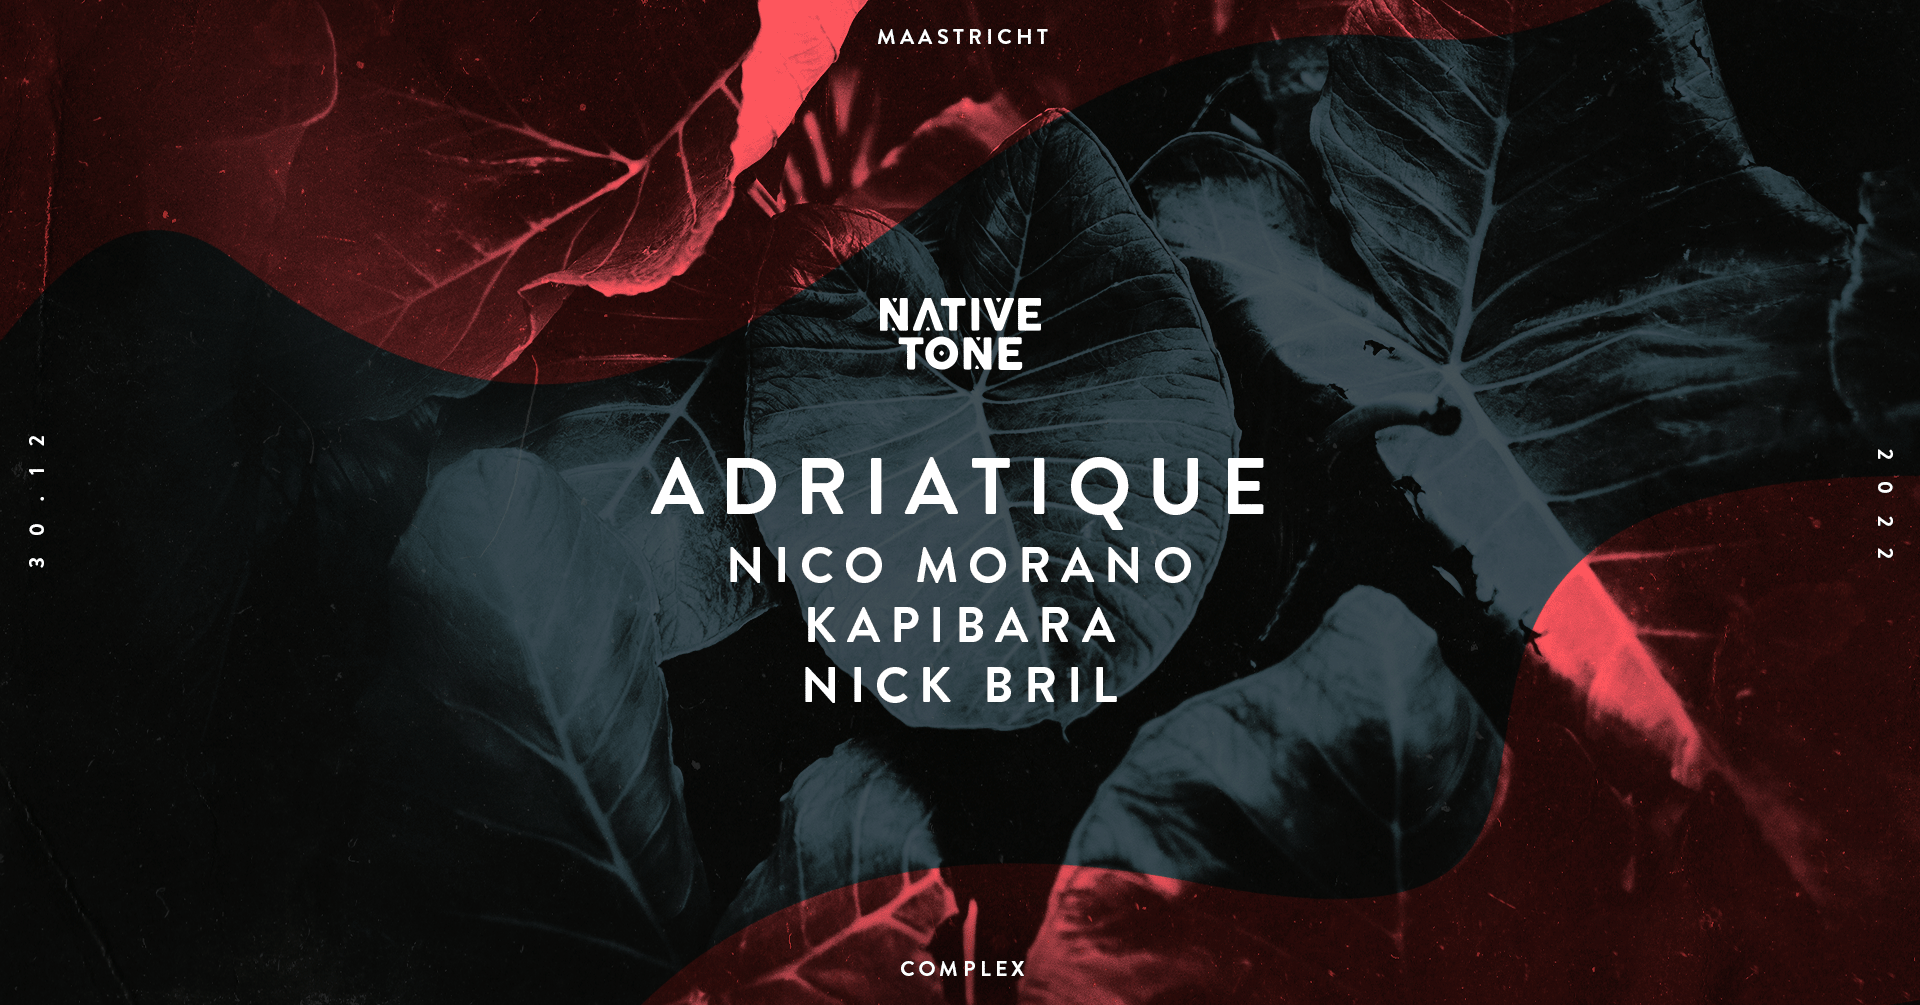 Native Tone presents Adriatique - Flyer front